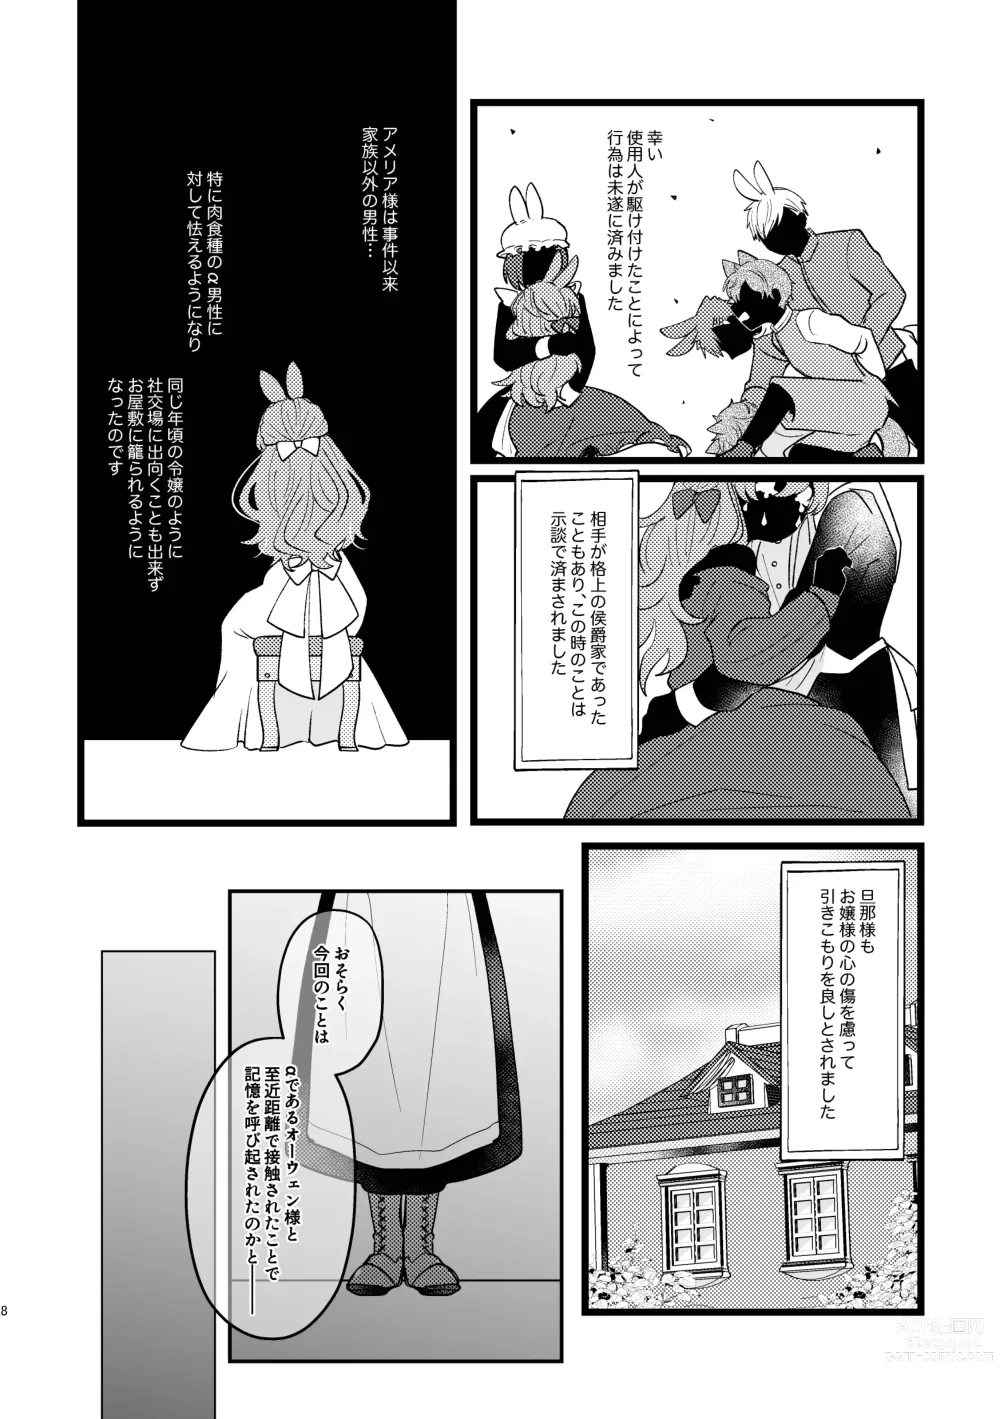 Page 8 of doujinshi Usagi Reijou to Ookami Reisoku